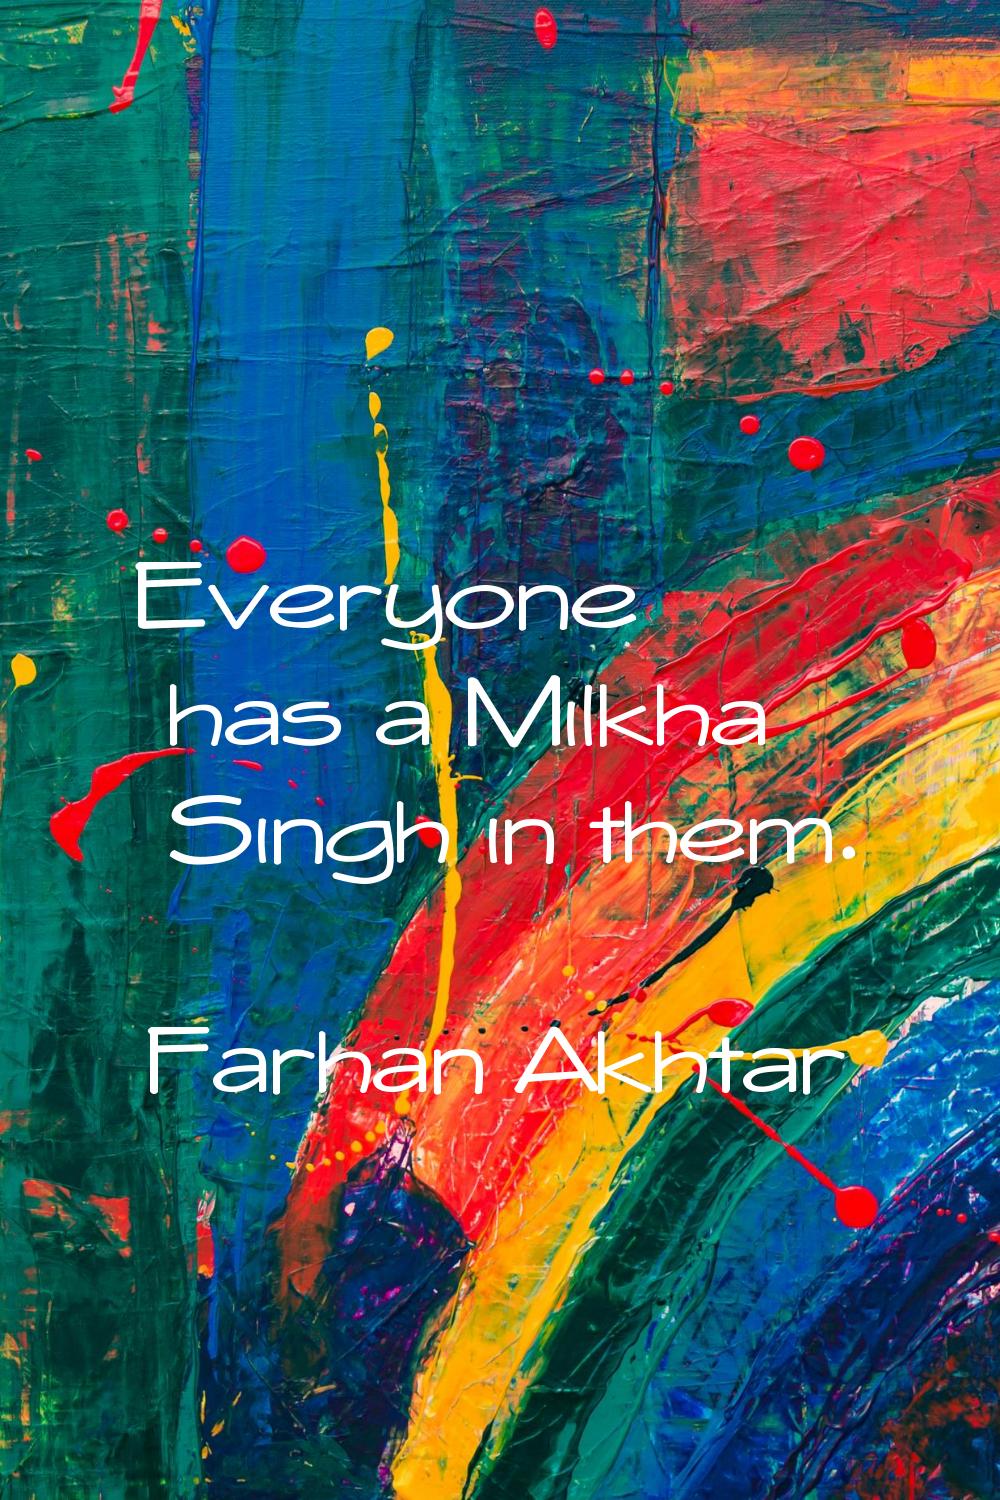 Everyone has a Milkha Singh in them.